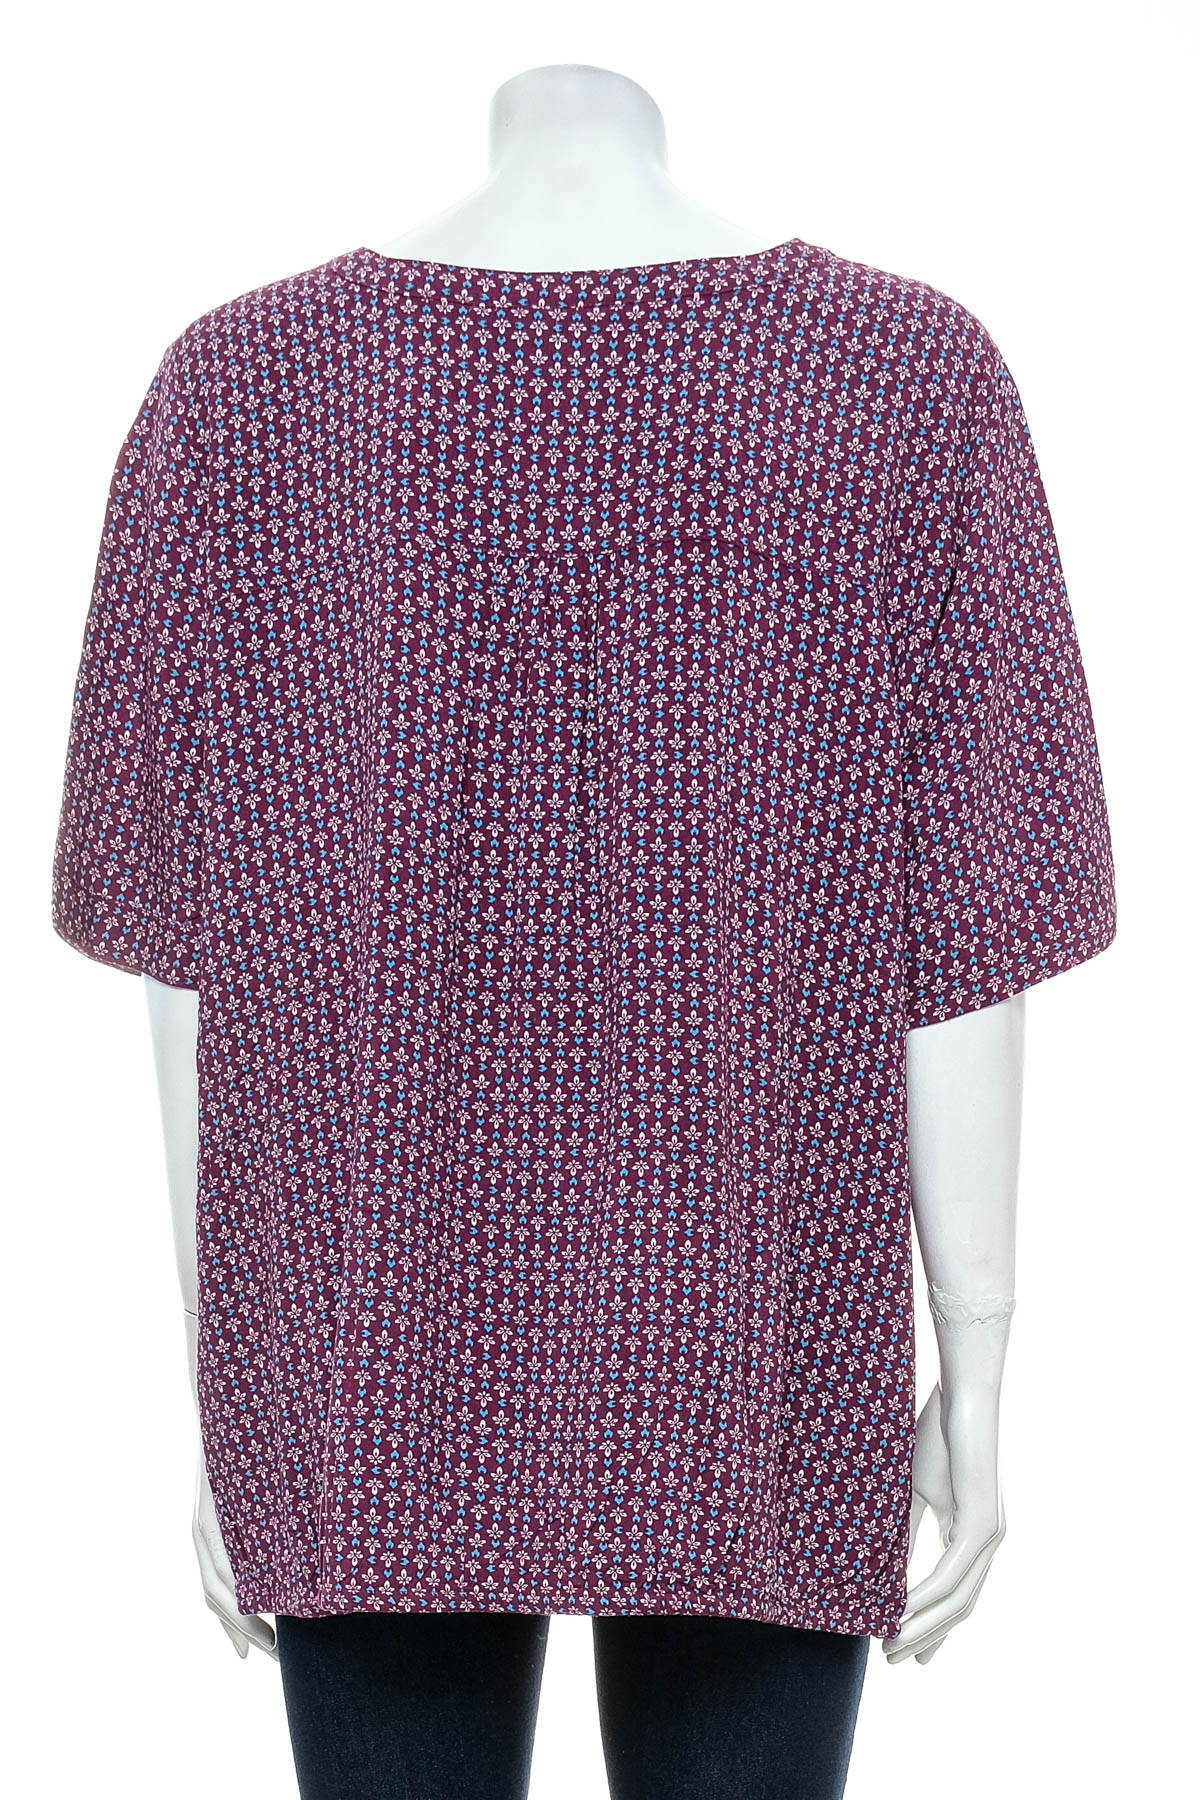 Women's shirt - Bpc Bonprix Collection - 1